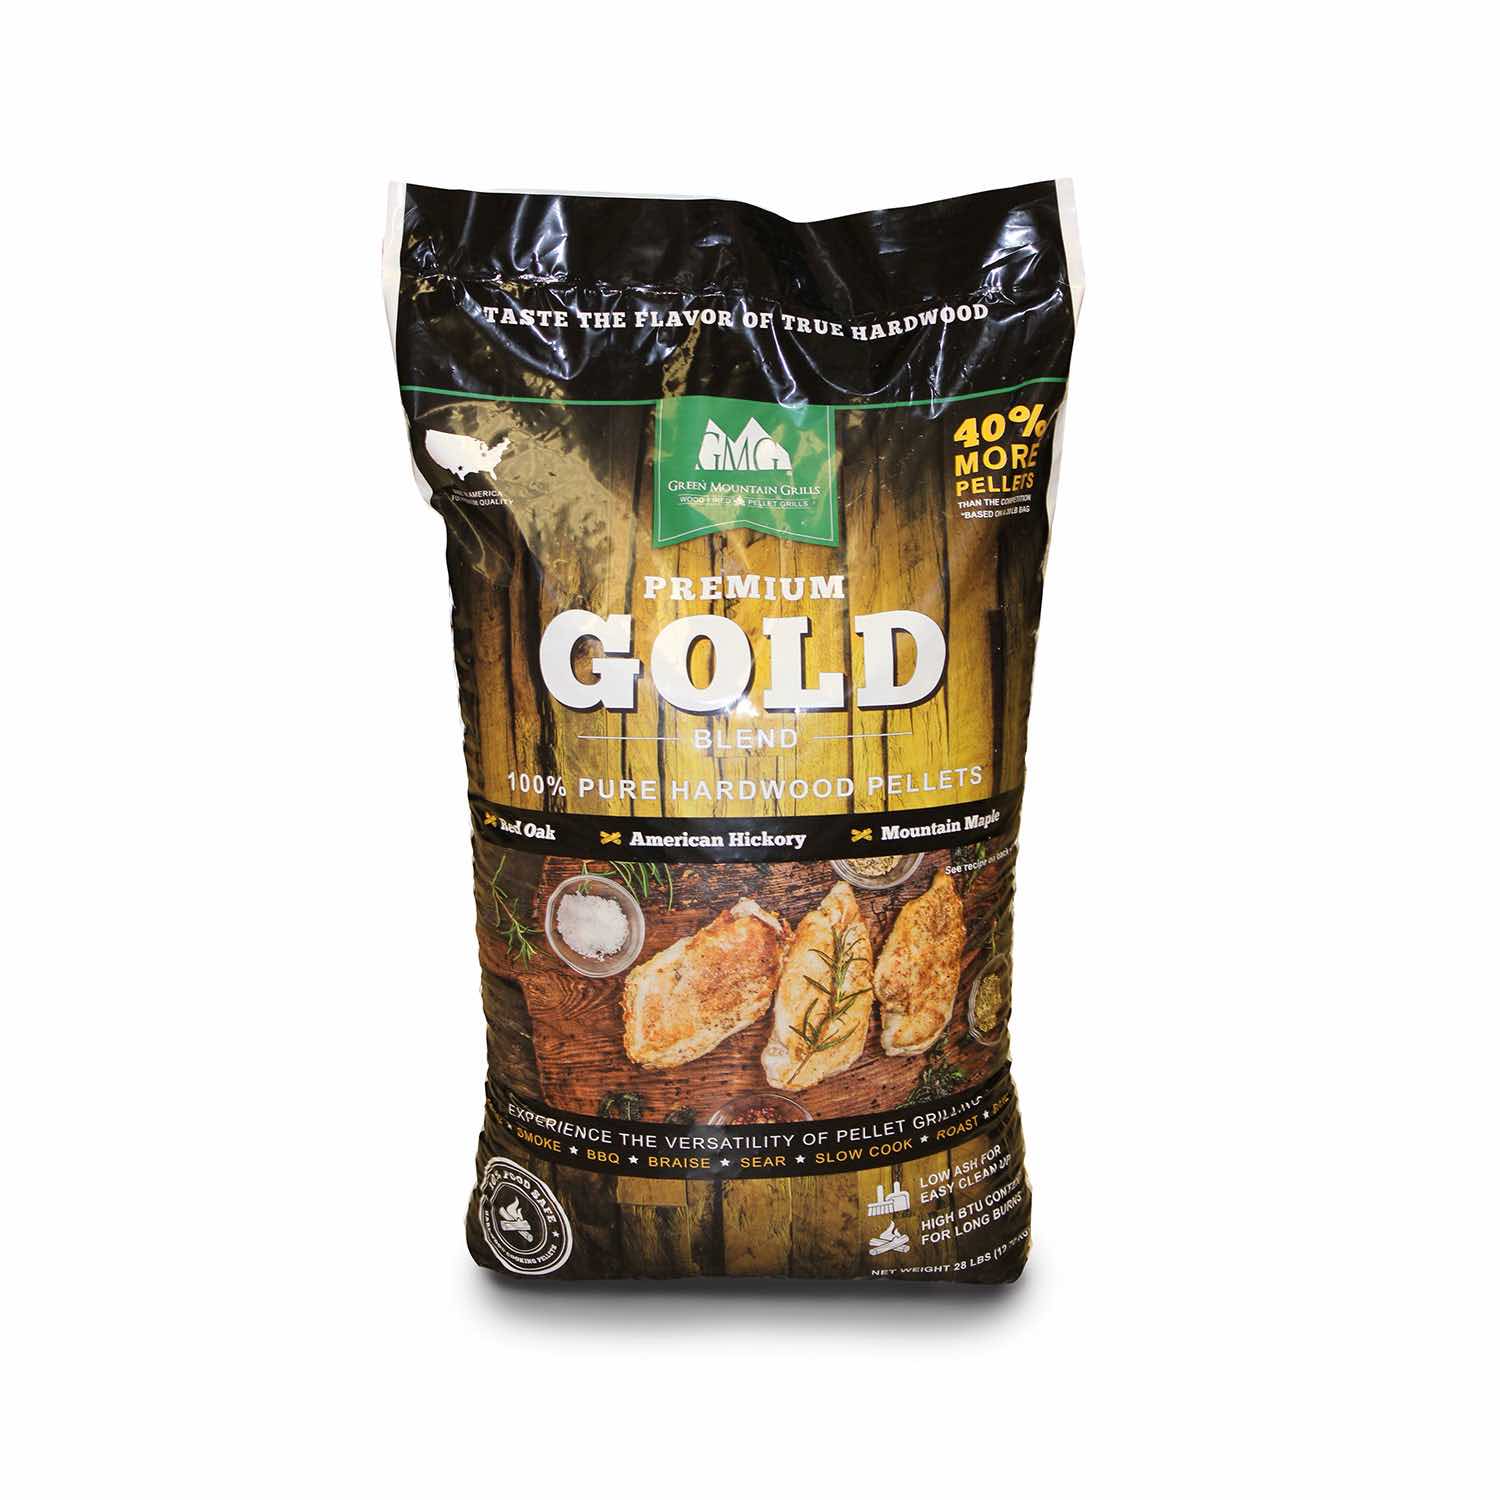 Premium Gold Blend Grilling Pellets - 28 lb bag